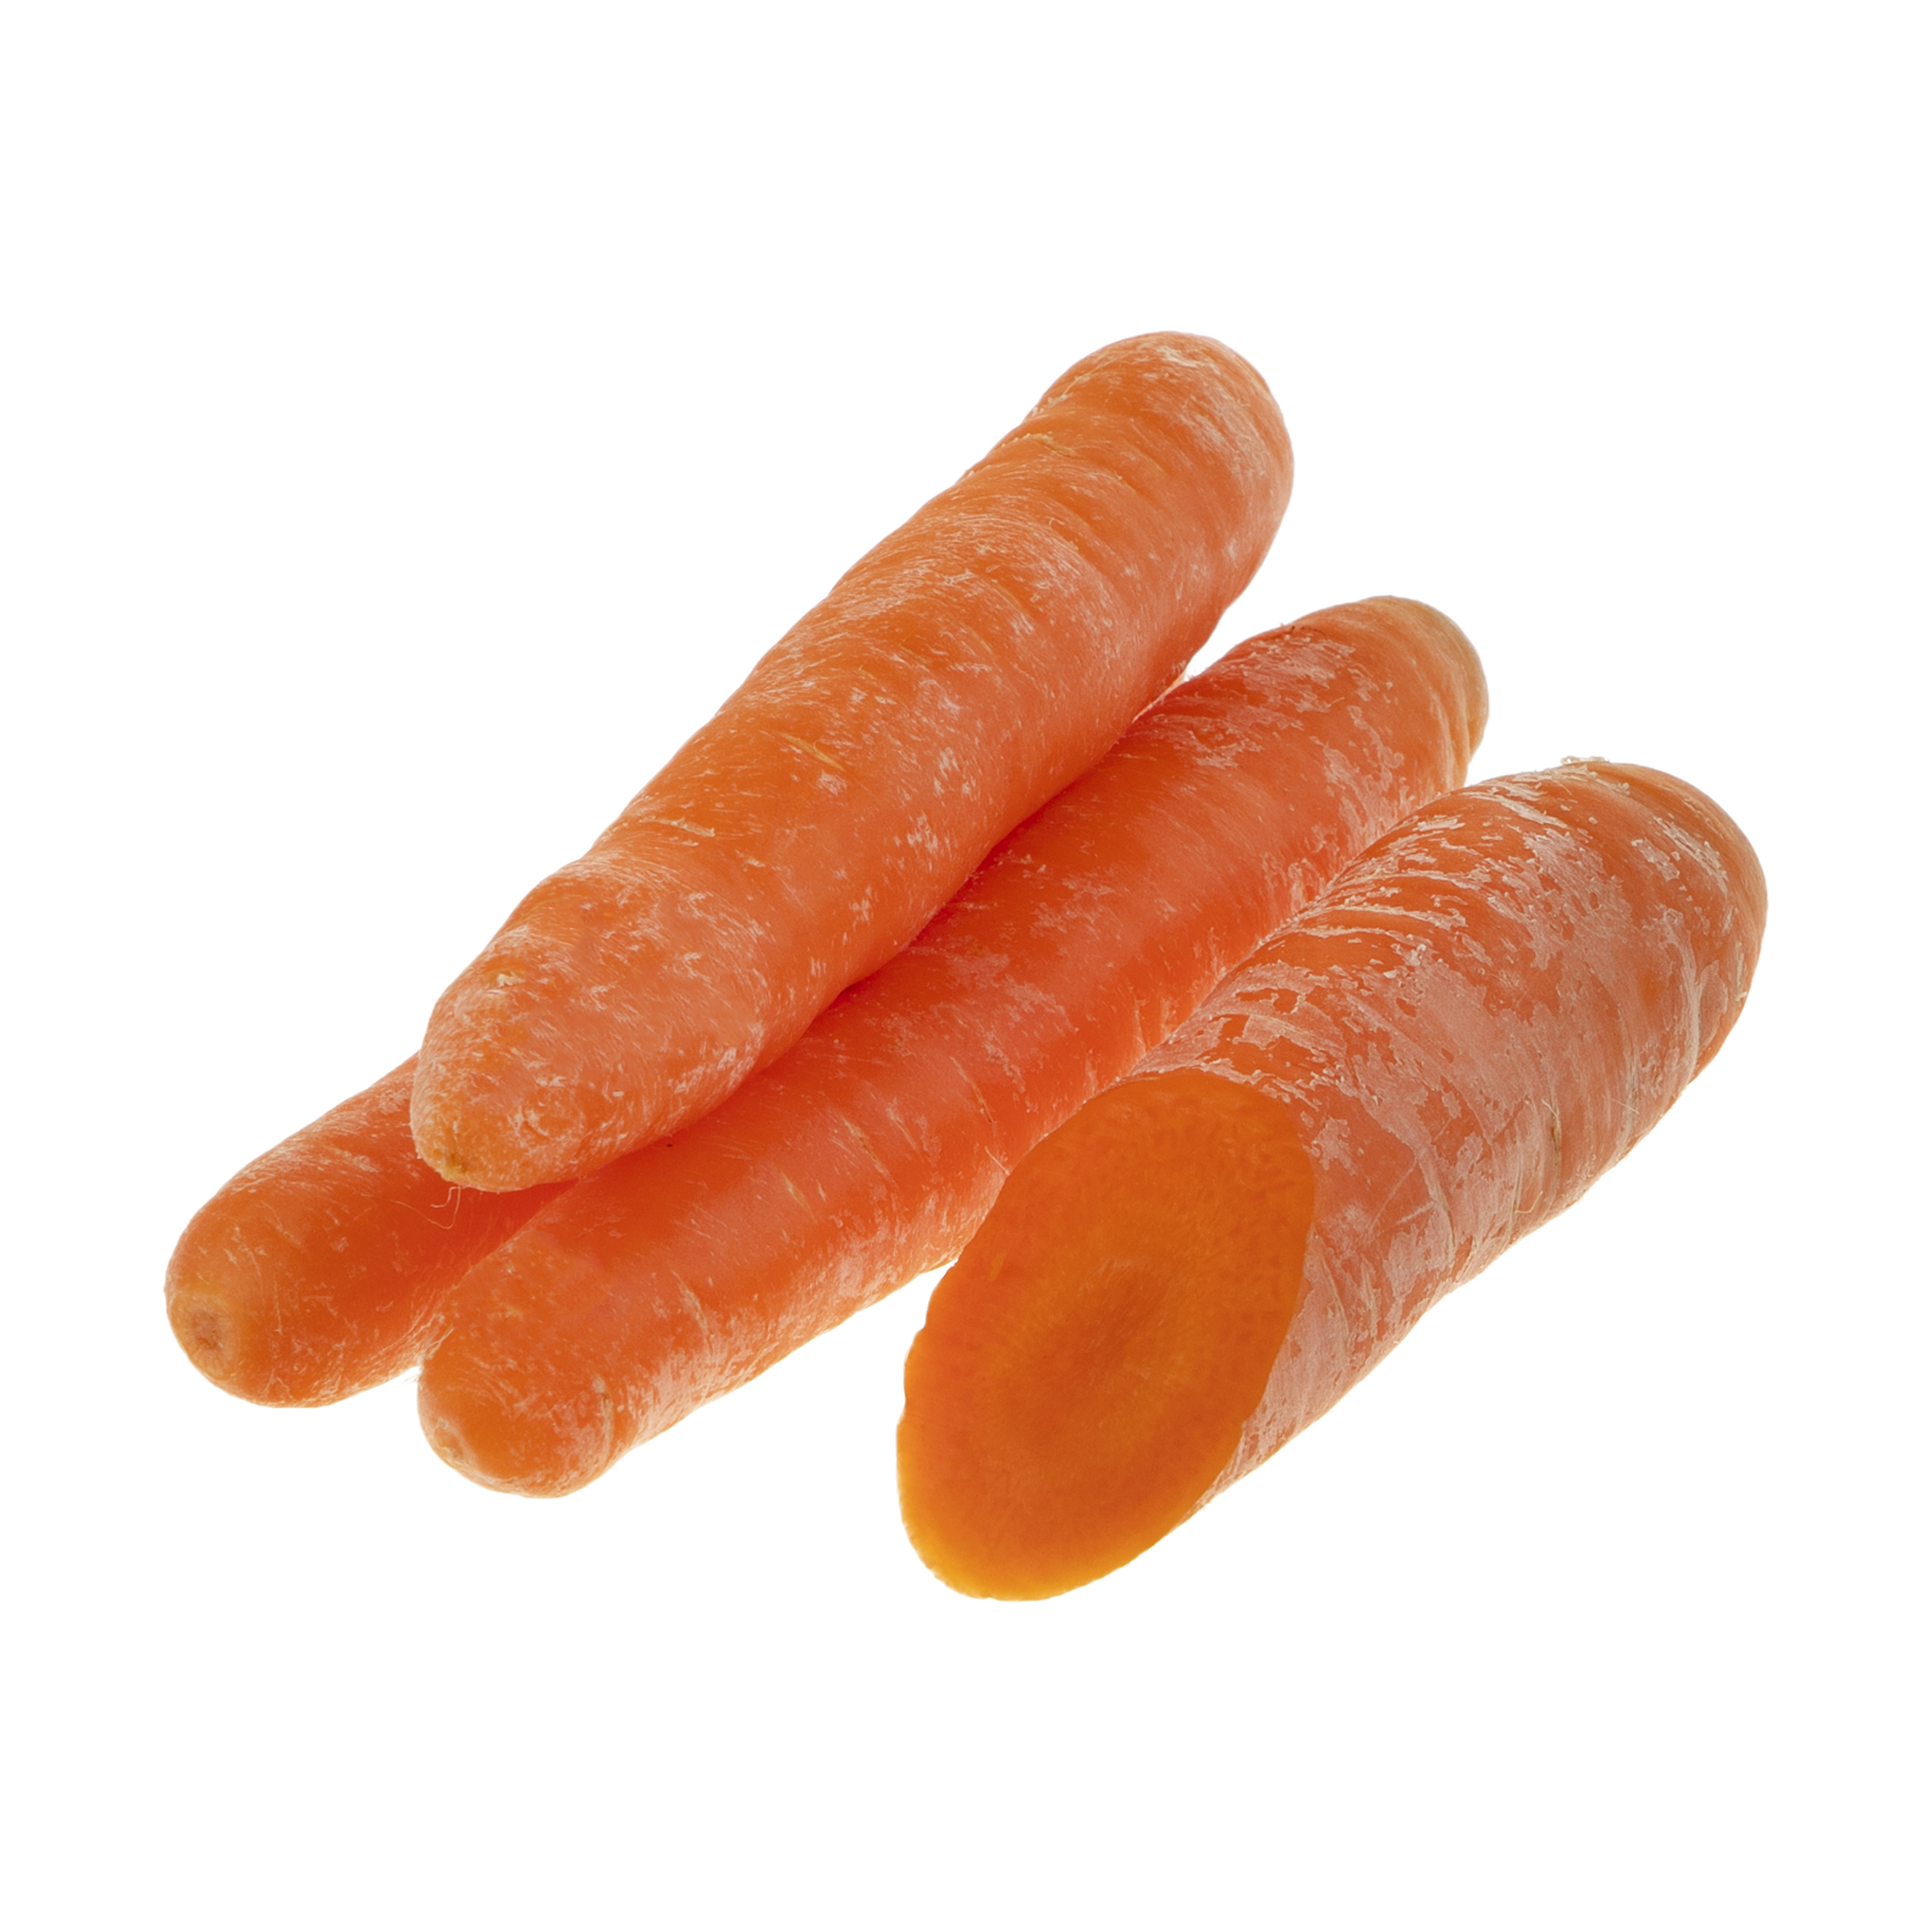 هویج درجه یک سبزیکو - 1 کیلوگرم